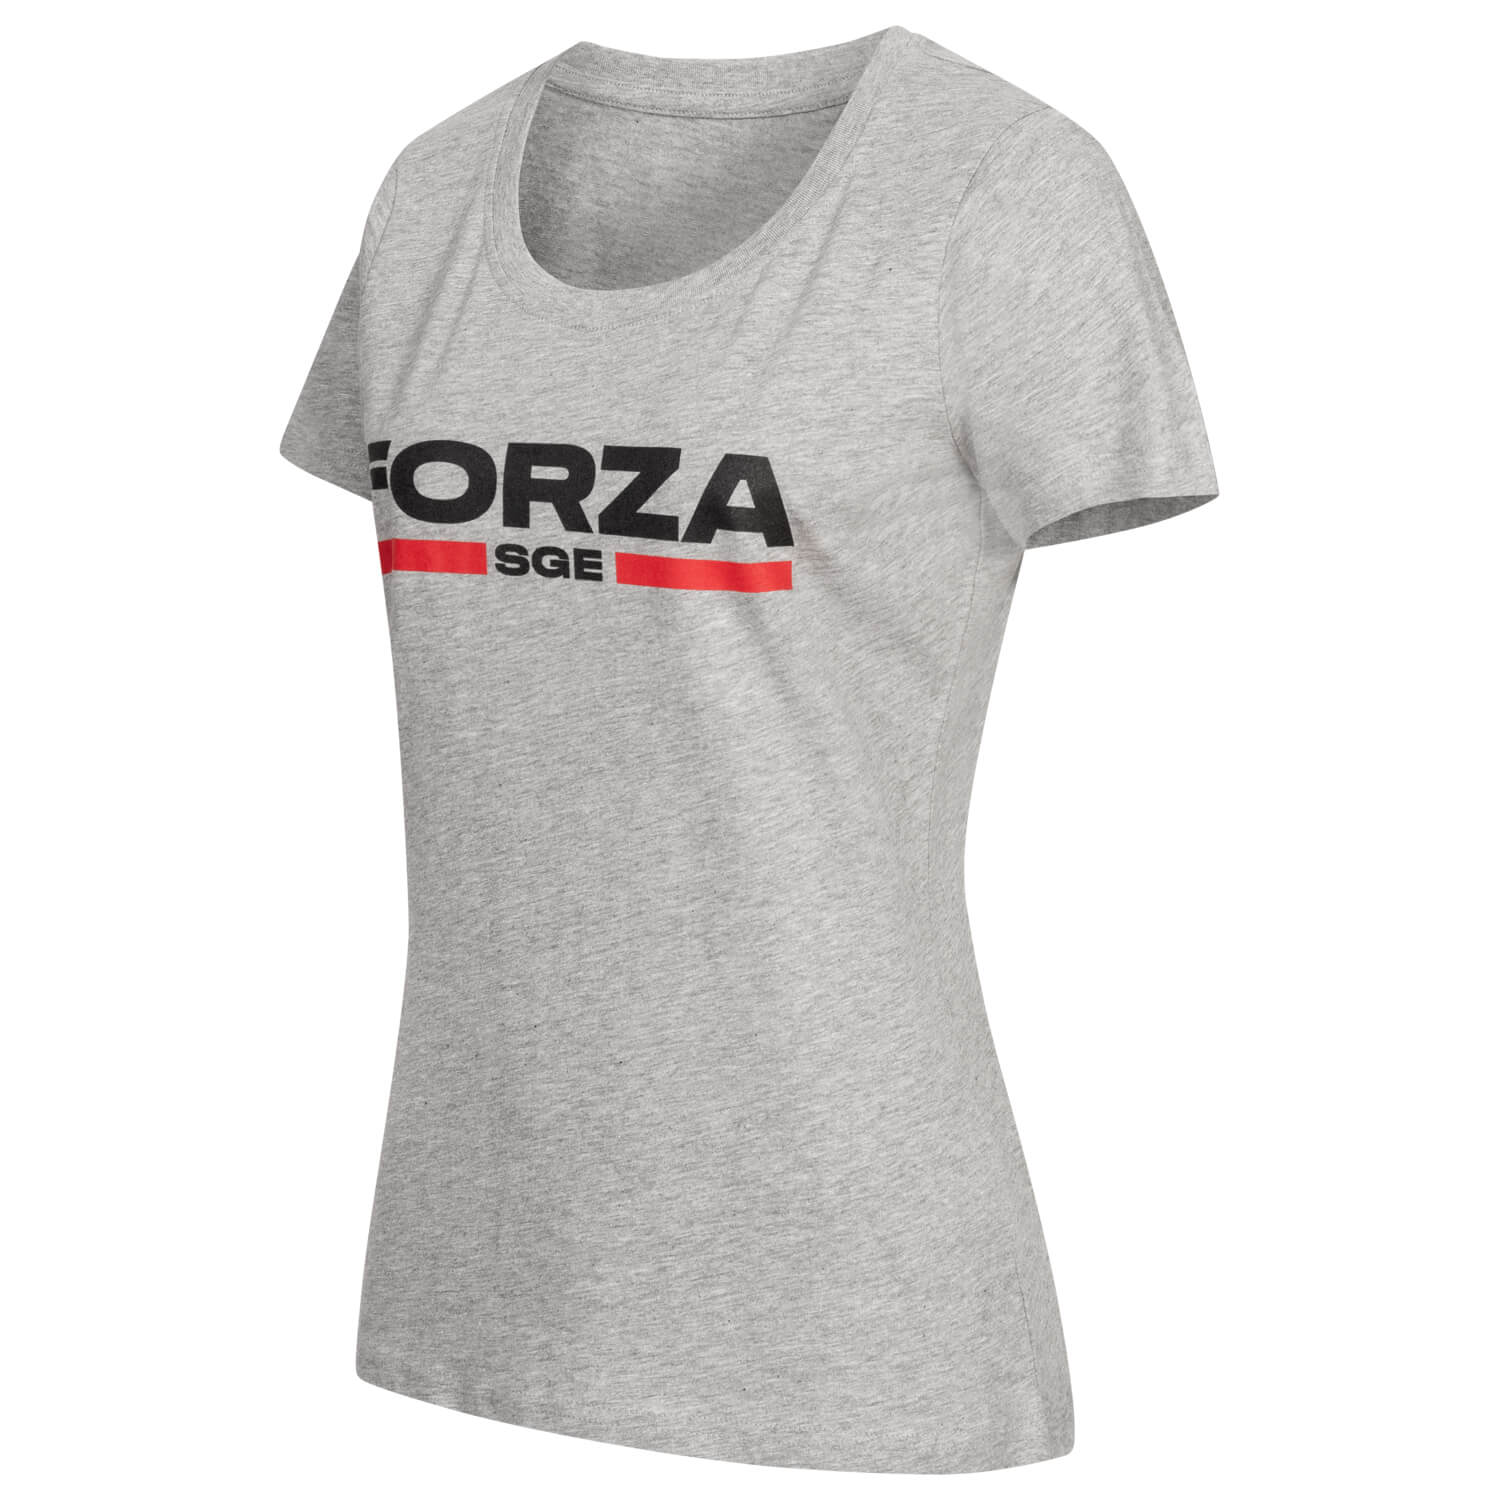 Bild 3: Damen T-Shirt Forza SGE